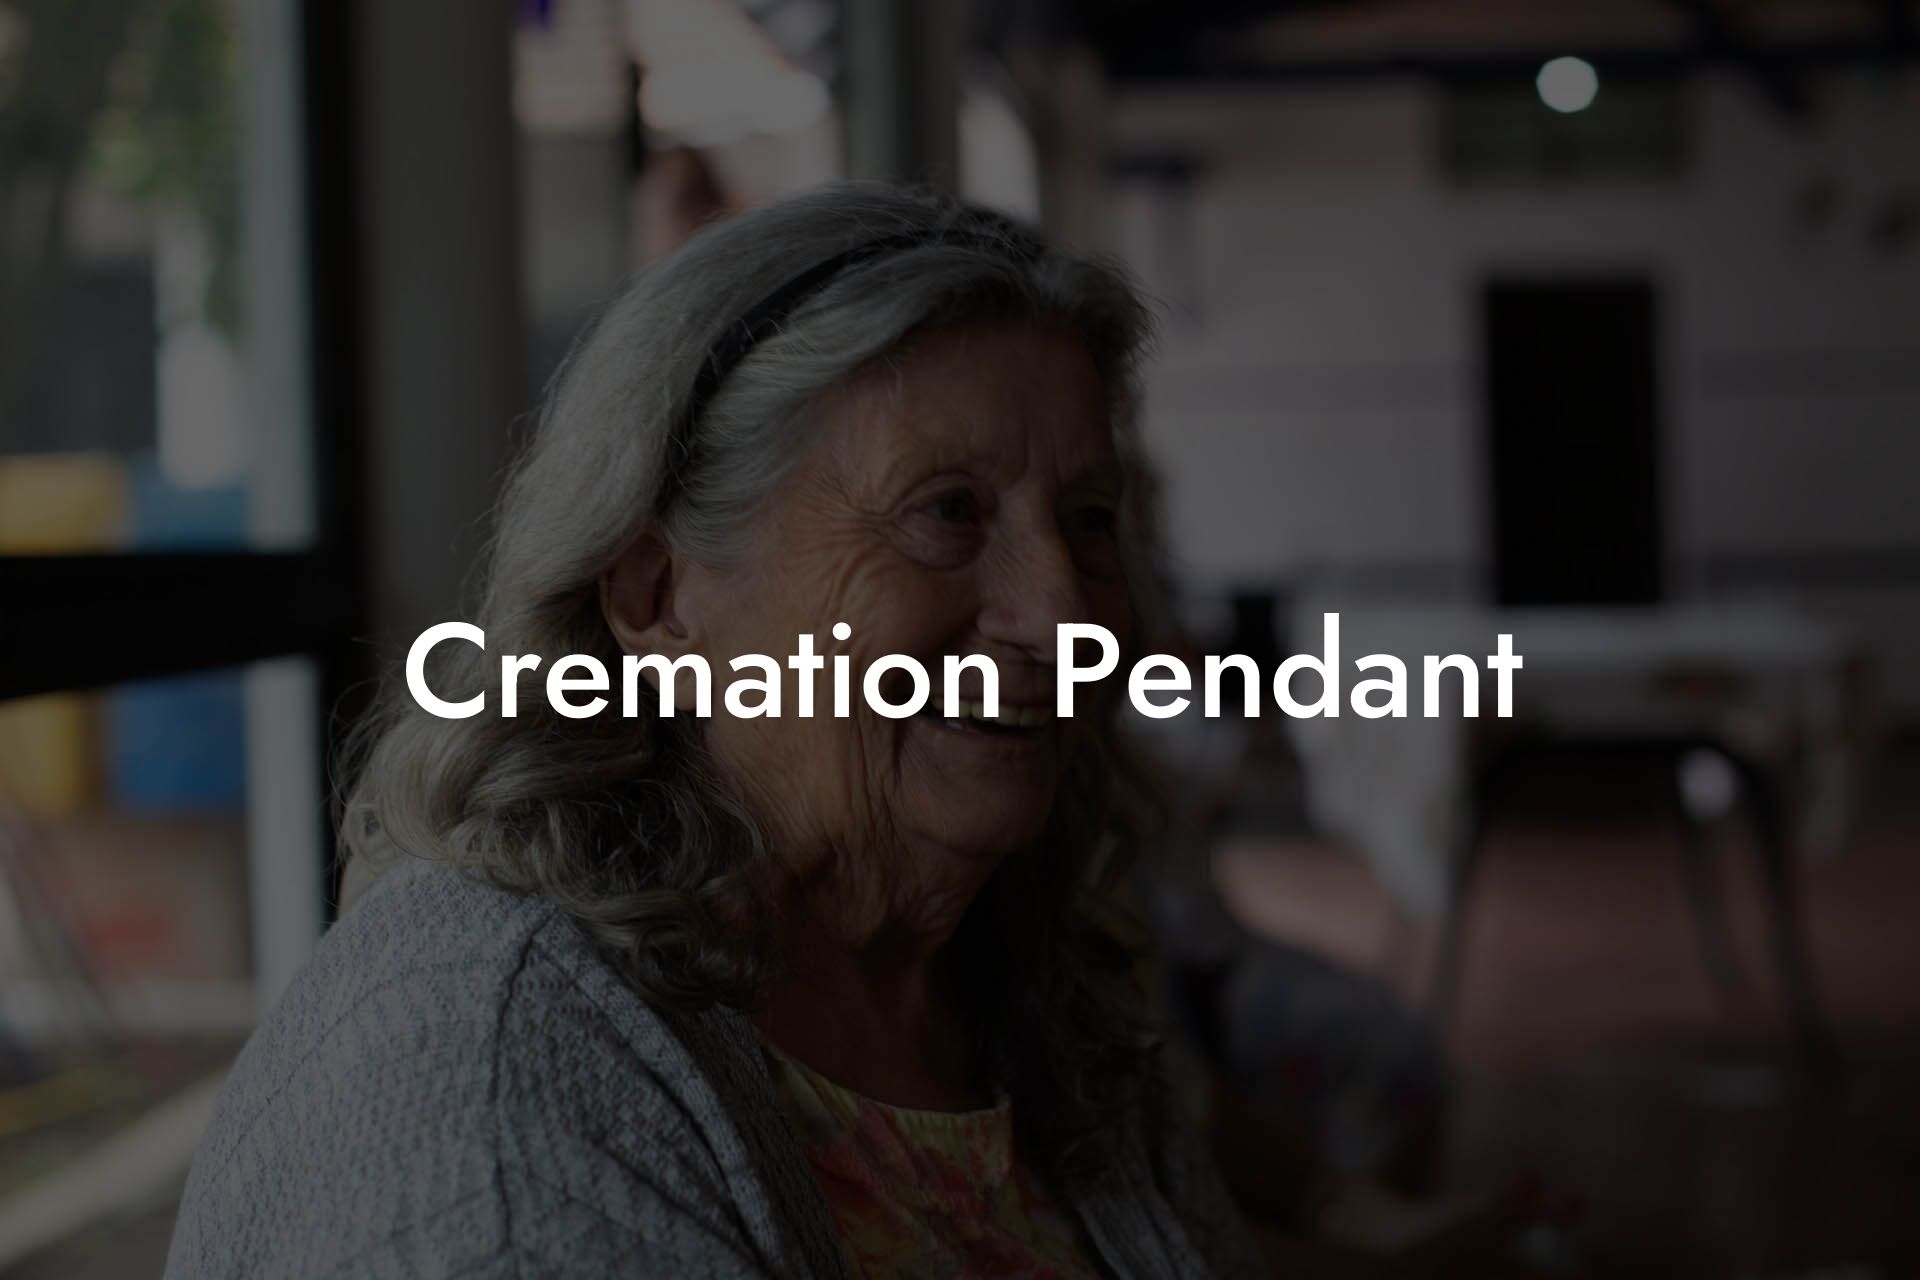 Cremation Pendant